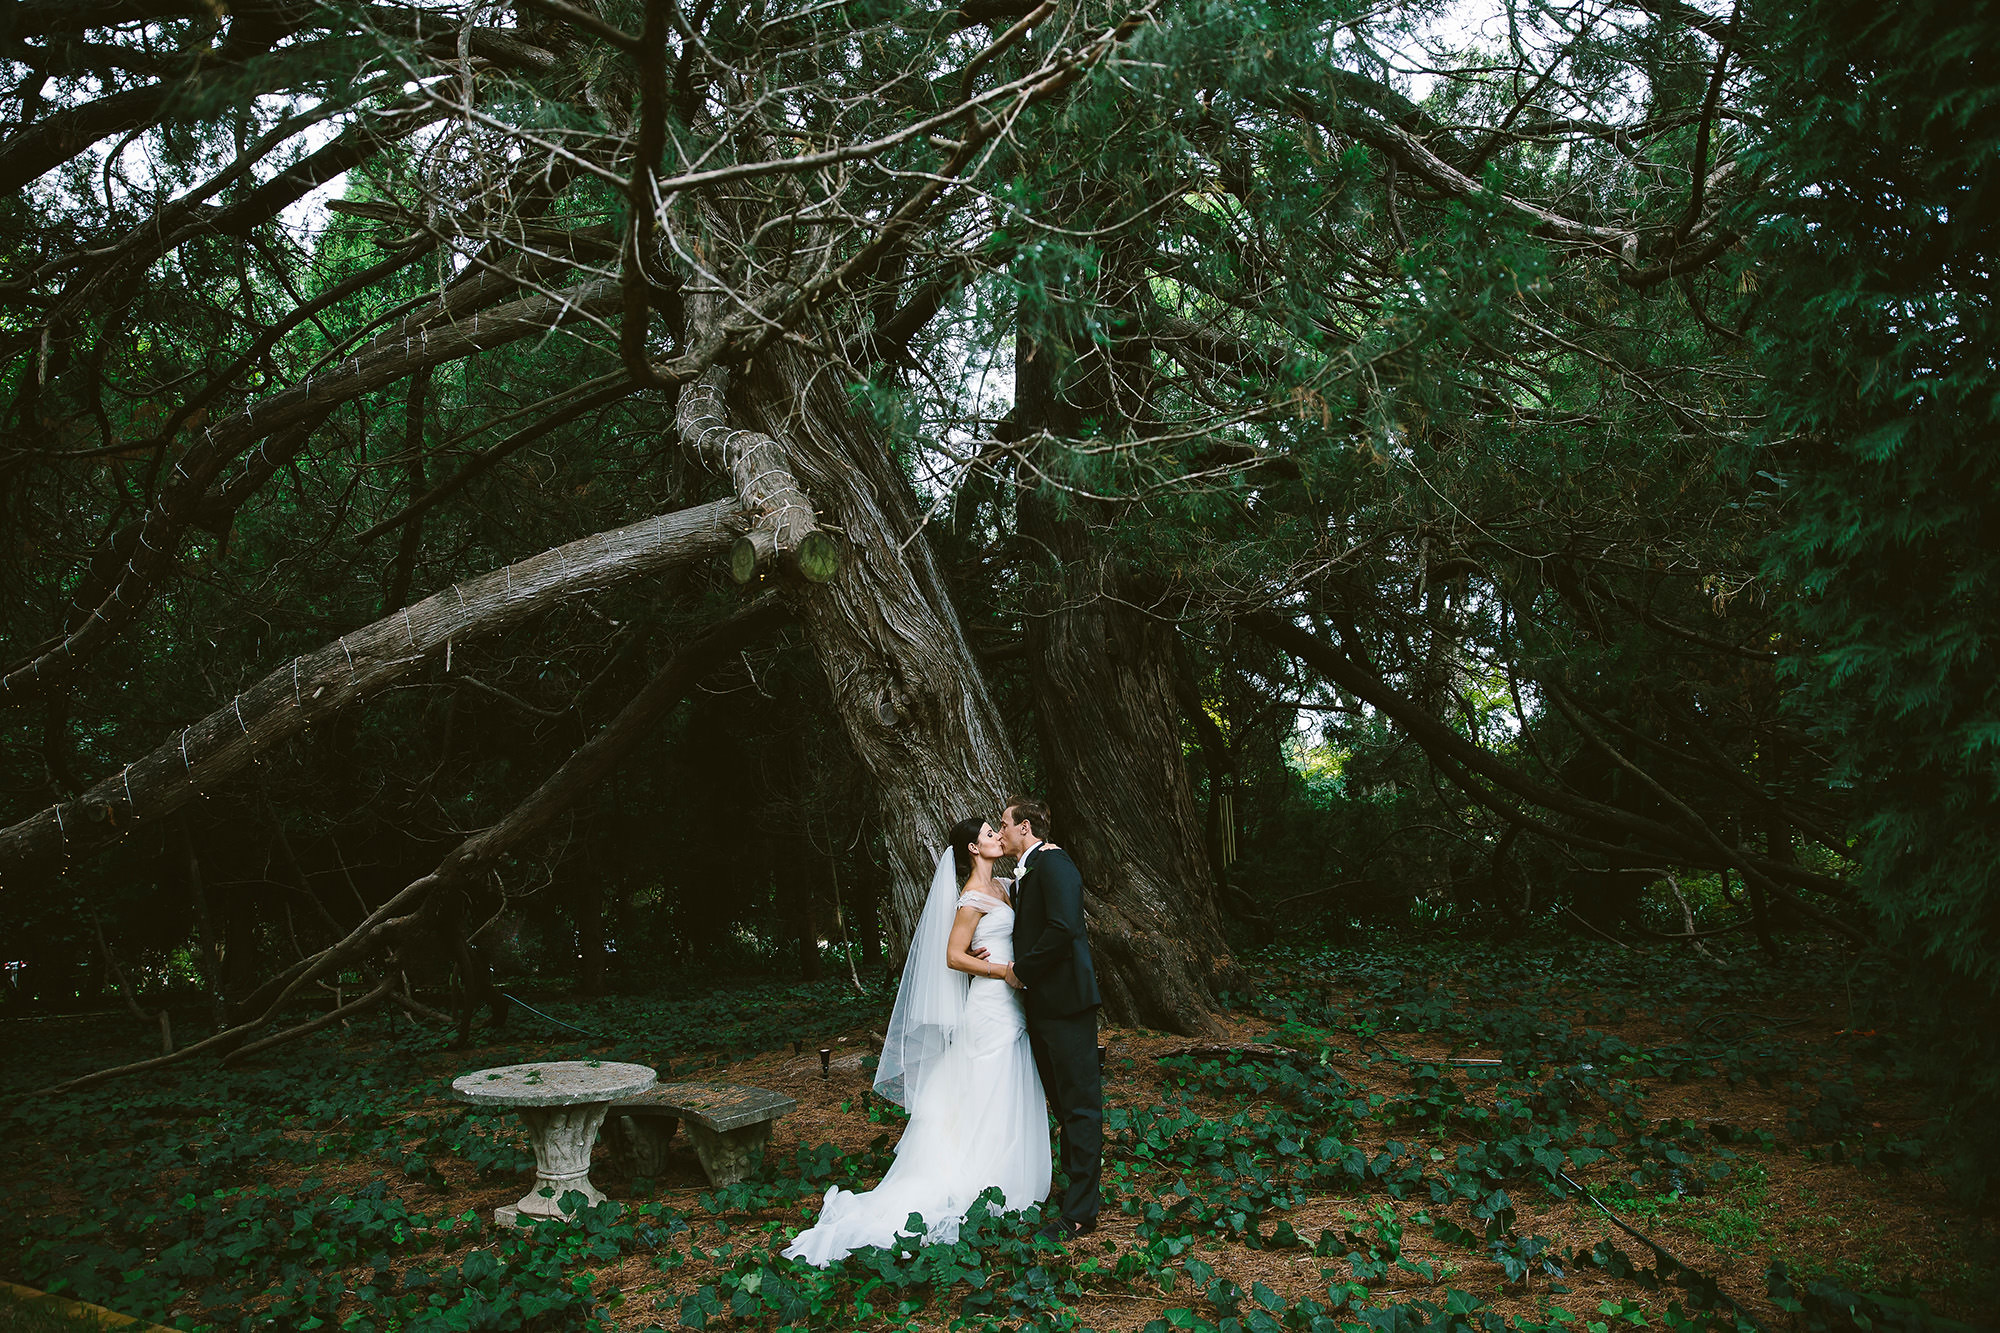 jaspers berry wedding with bride & groom under tree